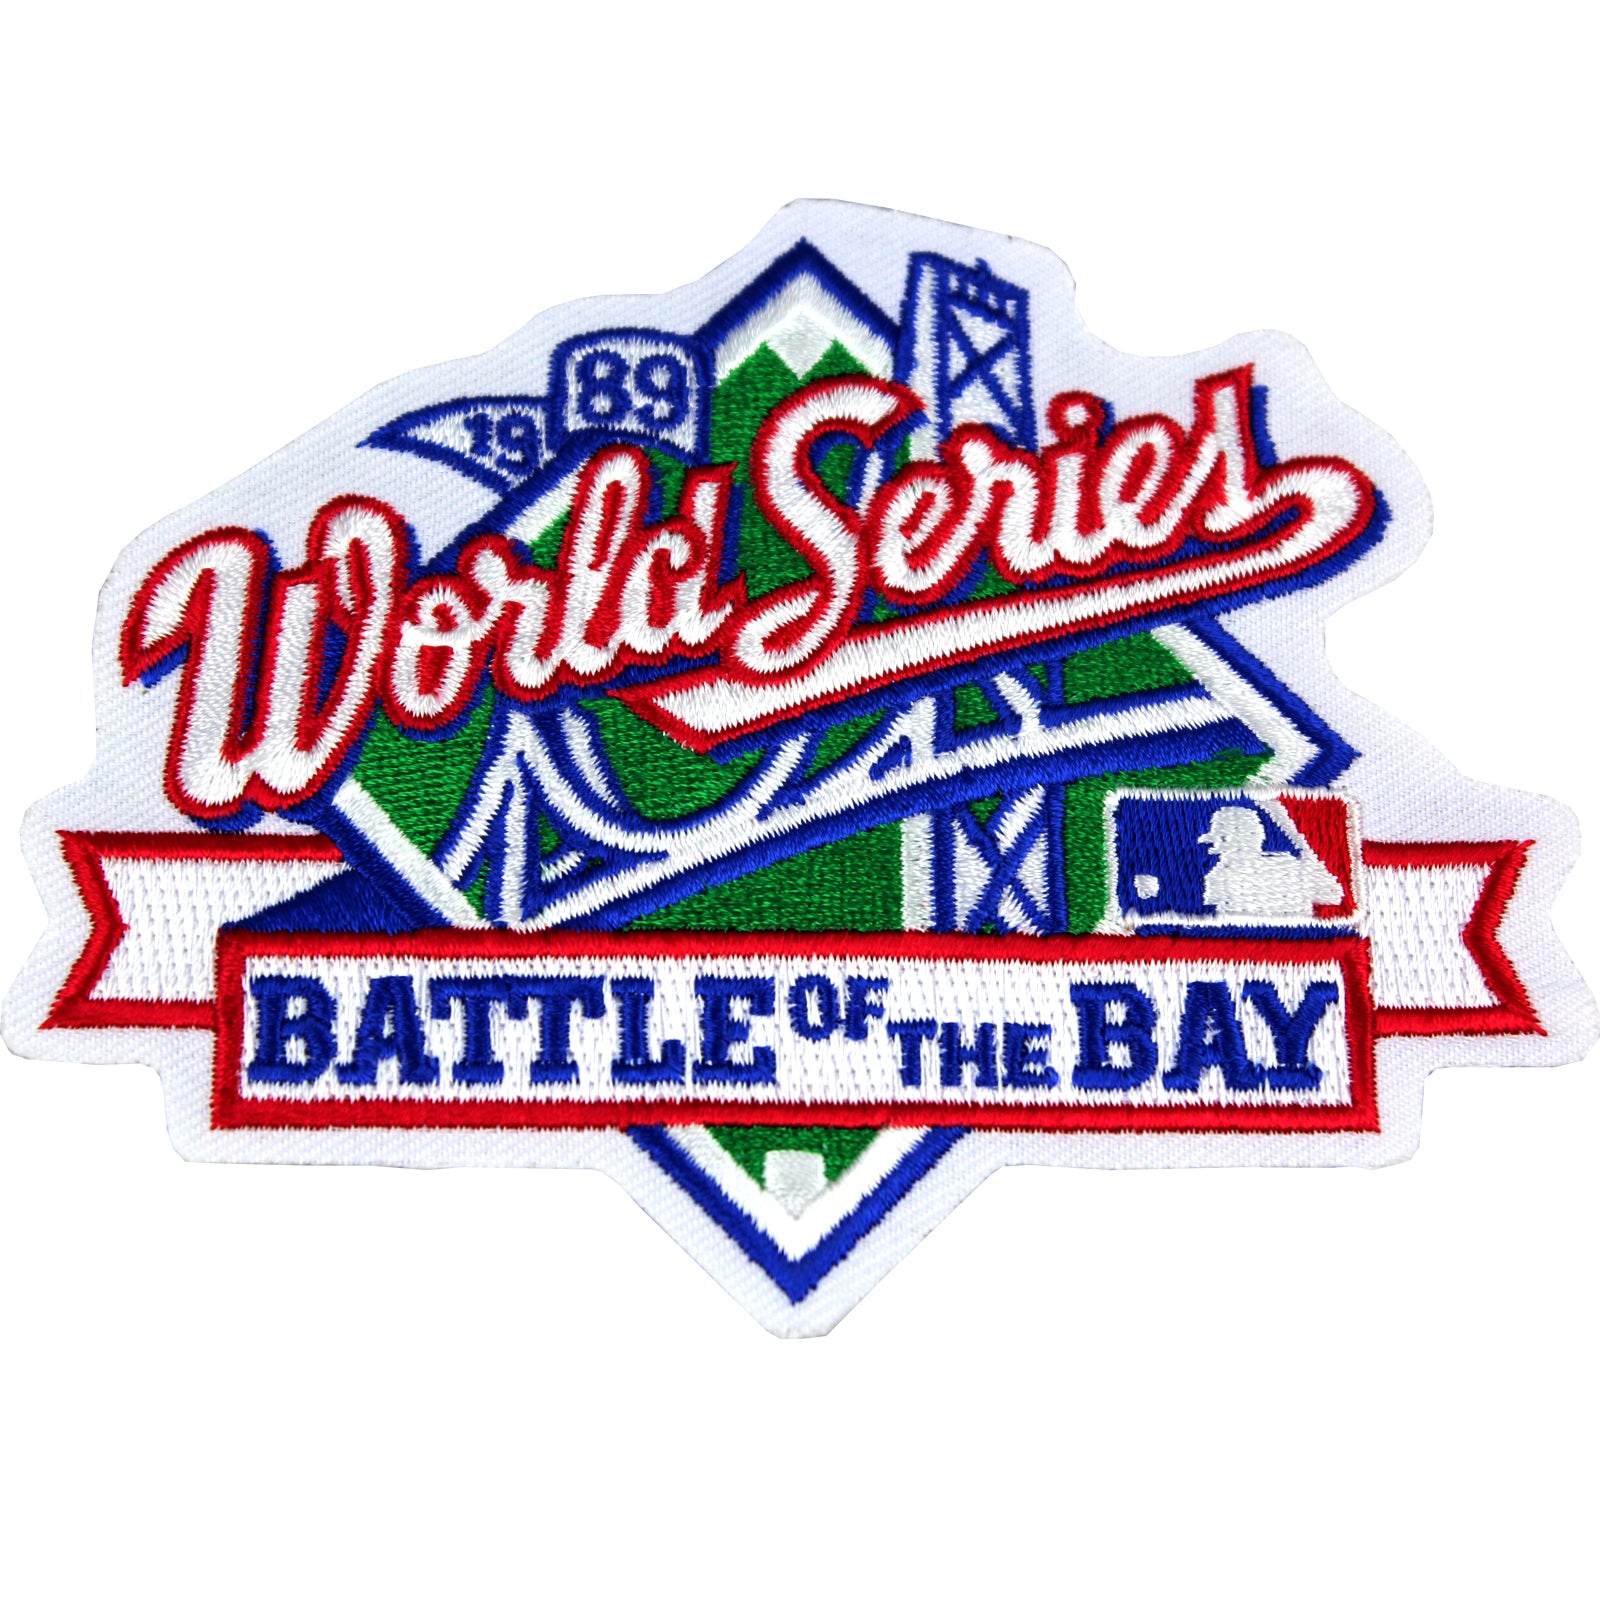 1989 MLB World Series Logo Jersey Patch Battle of the Bay San Francisco Giants vs. Oakland Athletics 